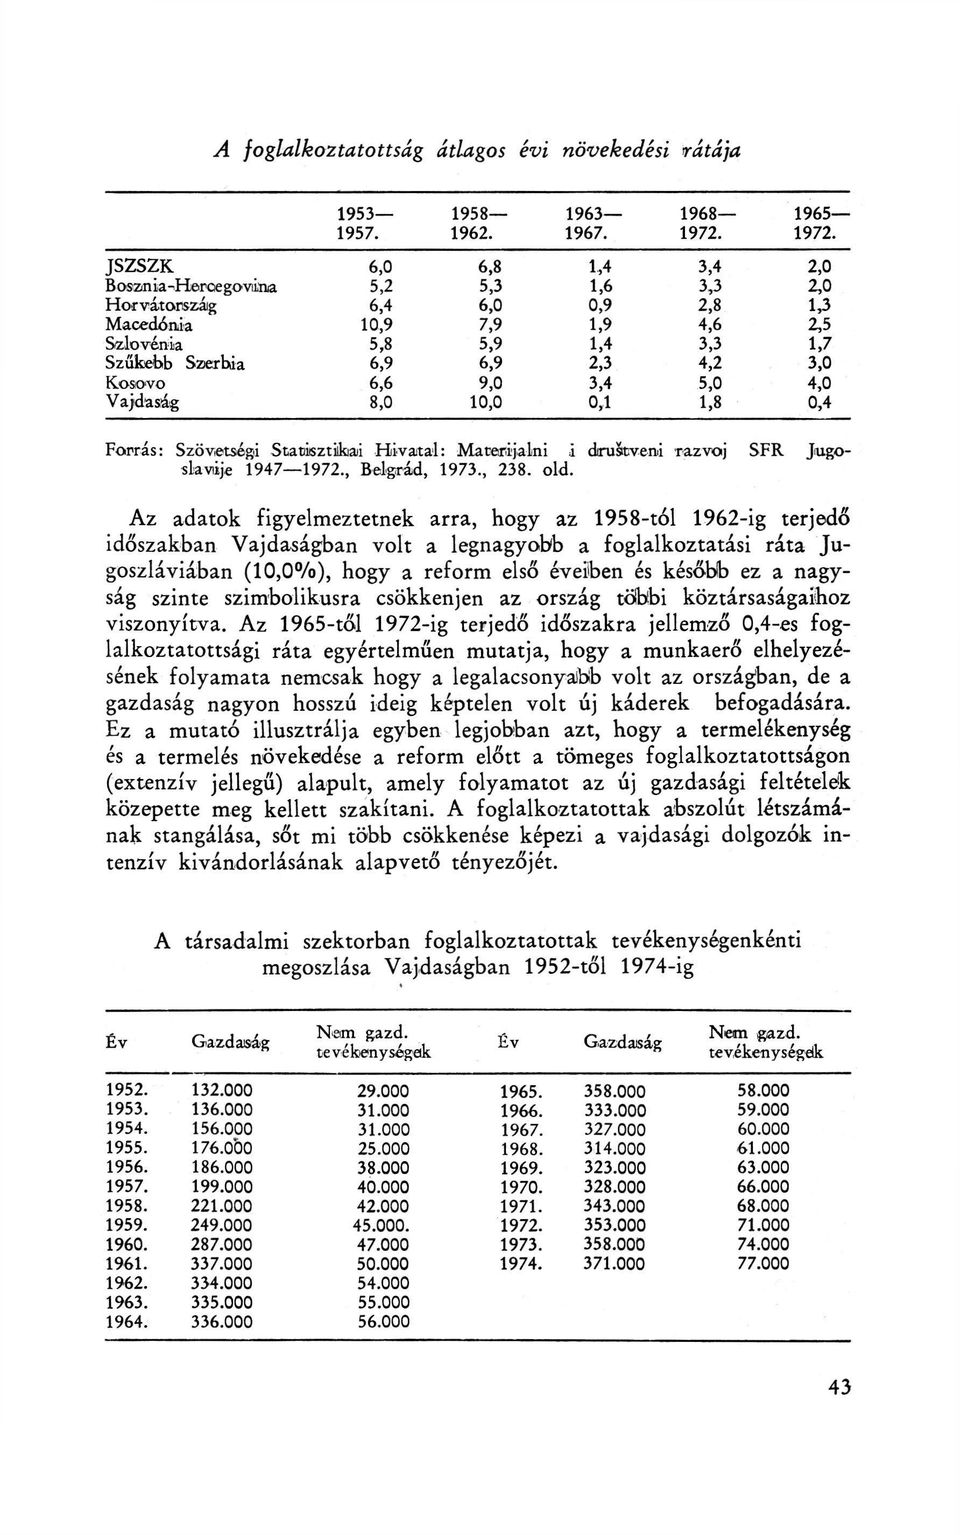 3,0 Kosovo 6,6 9,0 3,4 5,0 4,0 Vajdaság 8,0 10,0 0,1 1,8 0,4 Forrás: Szövetségi Statisztikai Hivatal: Materijalni i drustverni razvoj SFR Jugoslavije 1947 1972., Belgrád, 1973., 238. old.